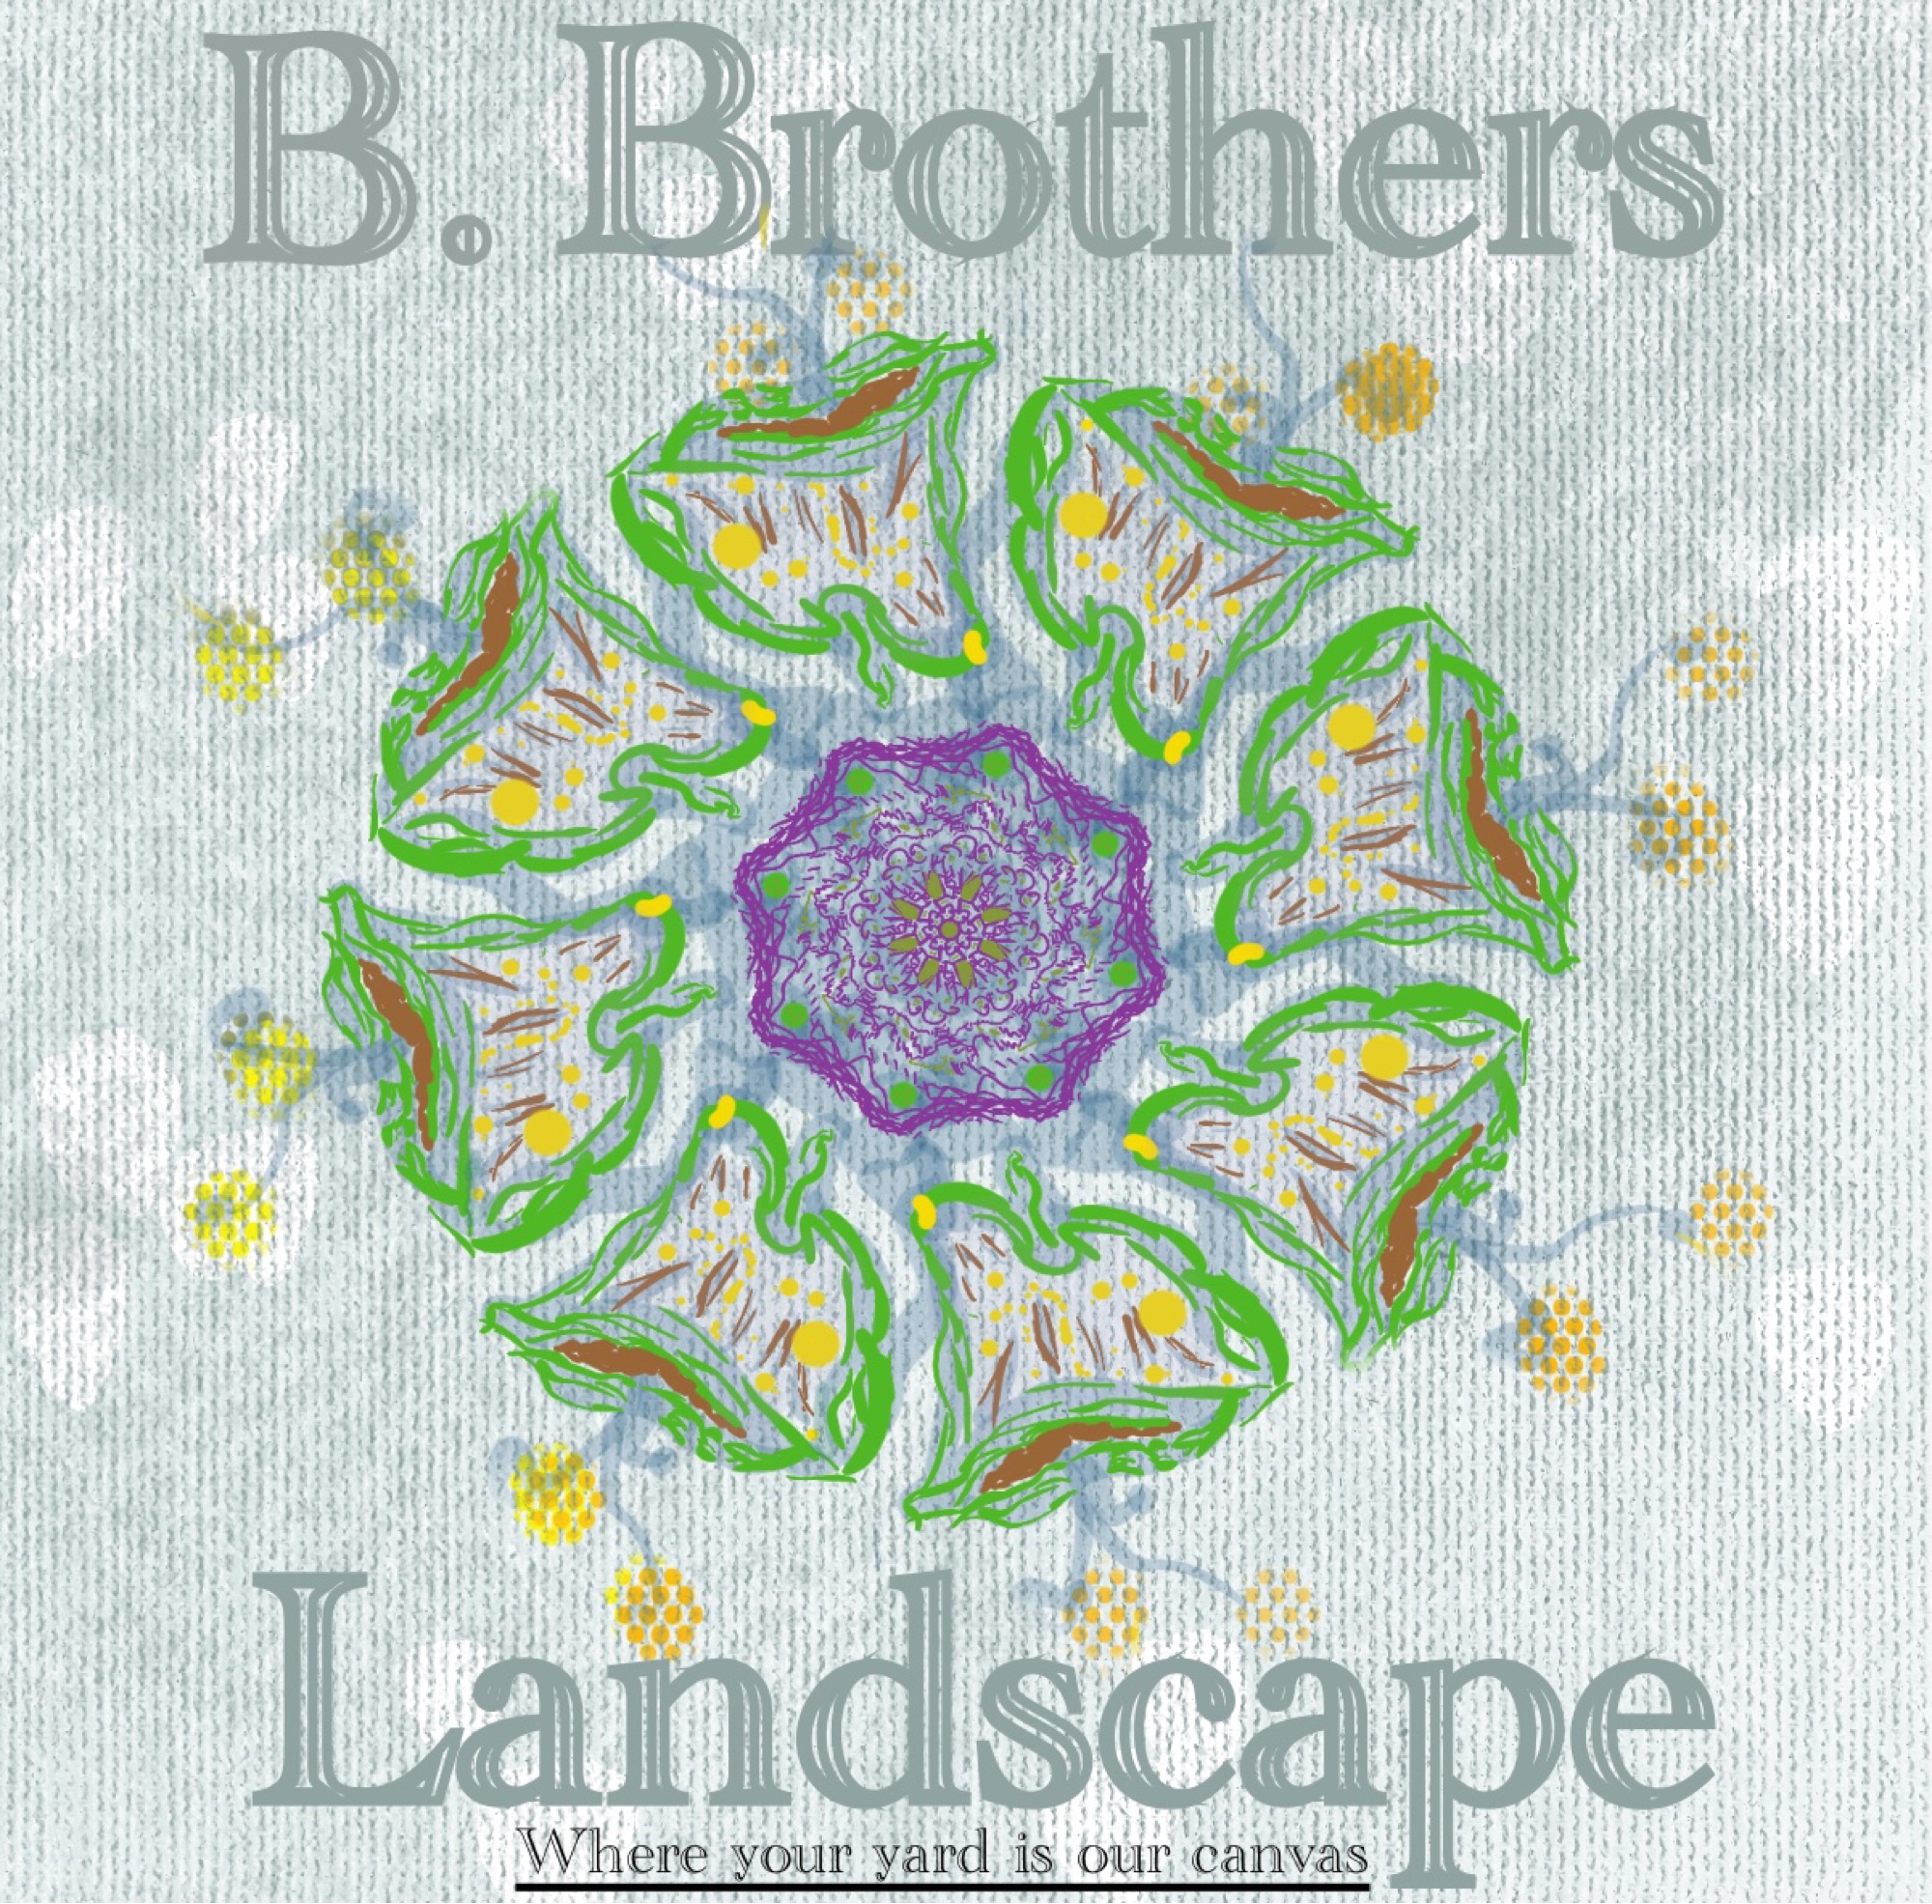 B Brothers Landscape Logo